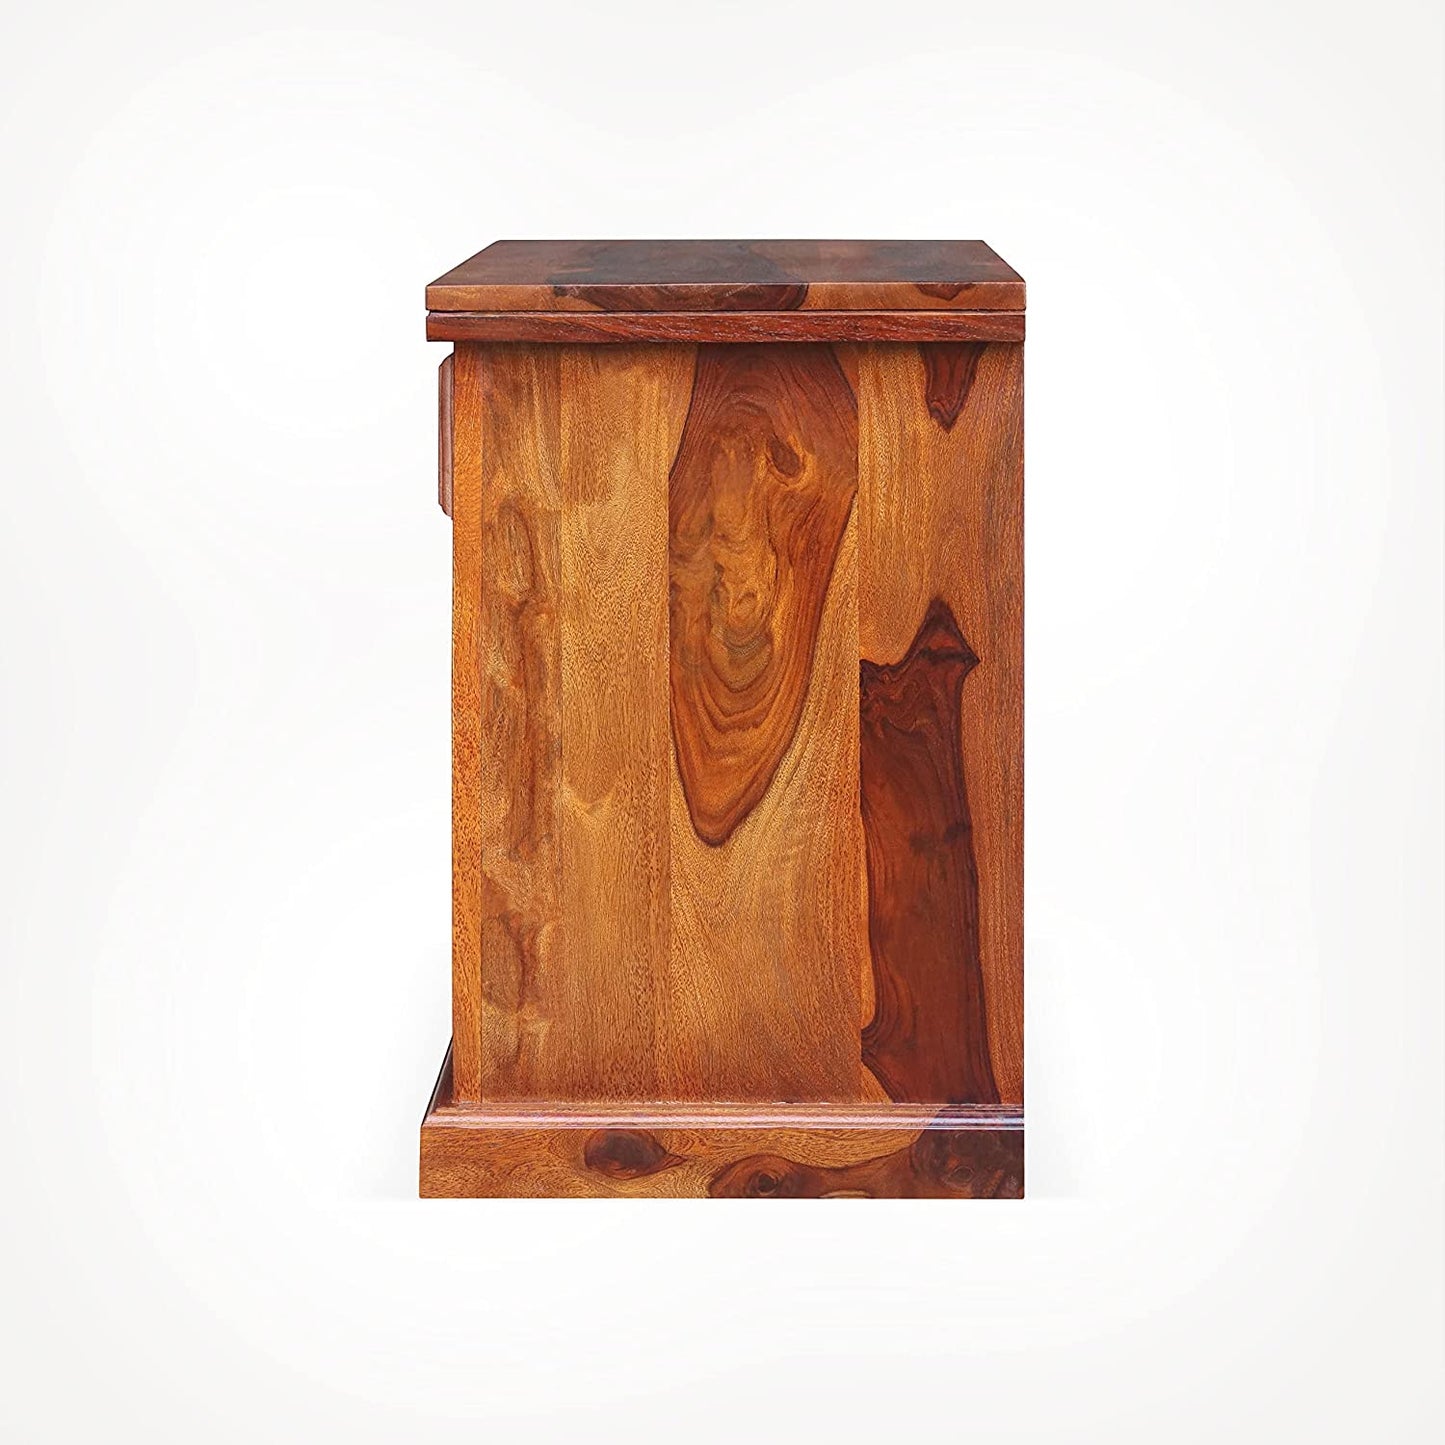 MoonWooden Wooden Bedside Table for Bedroom | Wooden Nightstand Lamp Table with 1 Drawer Storage | Sheesham Wood, Dark Honey